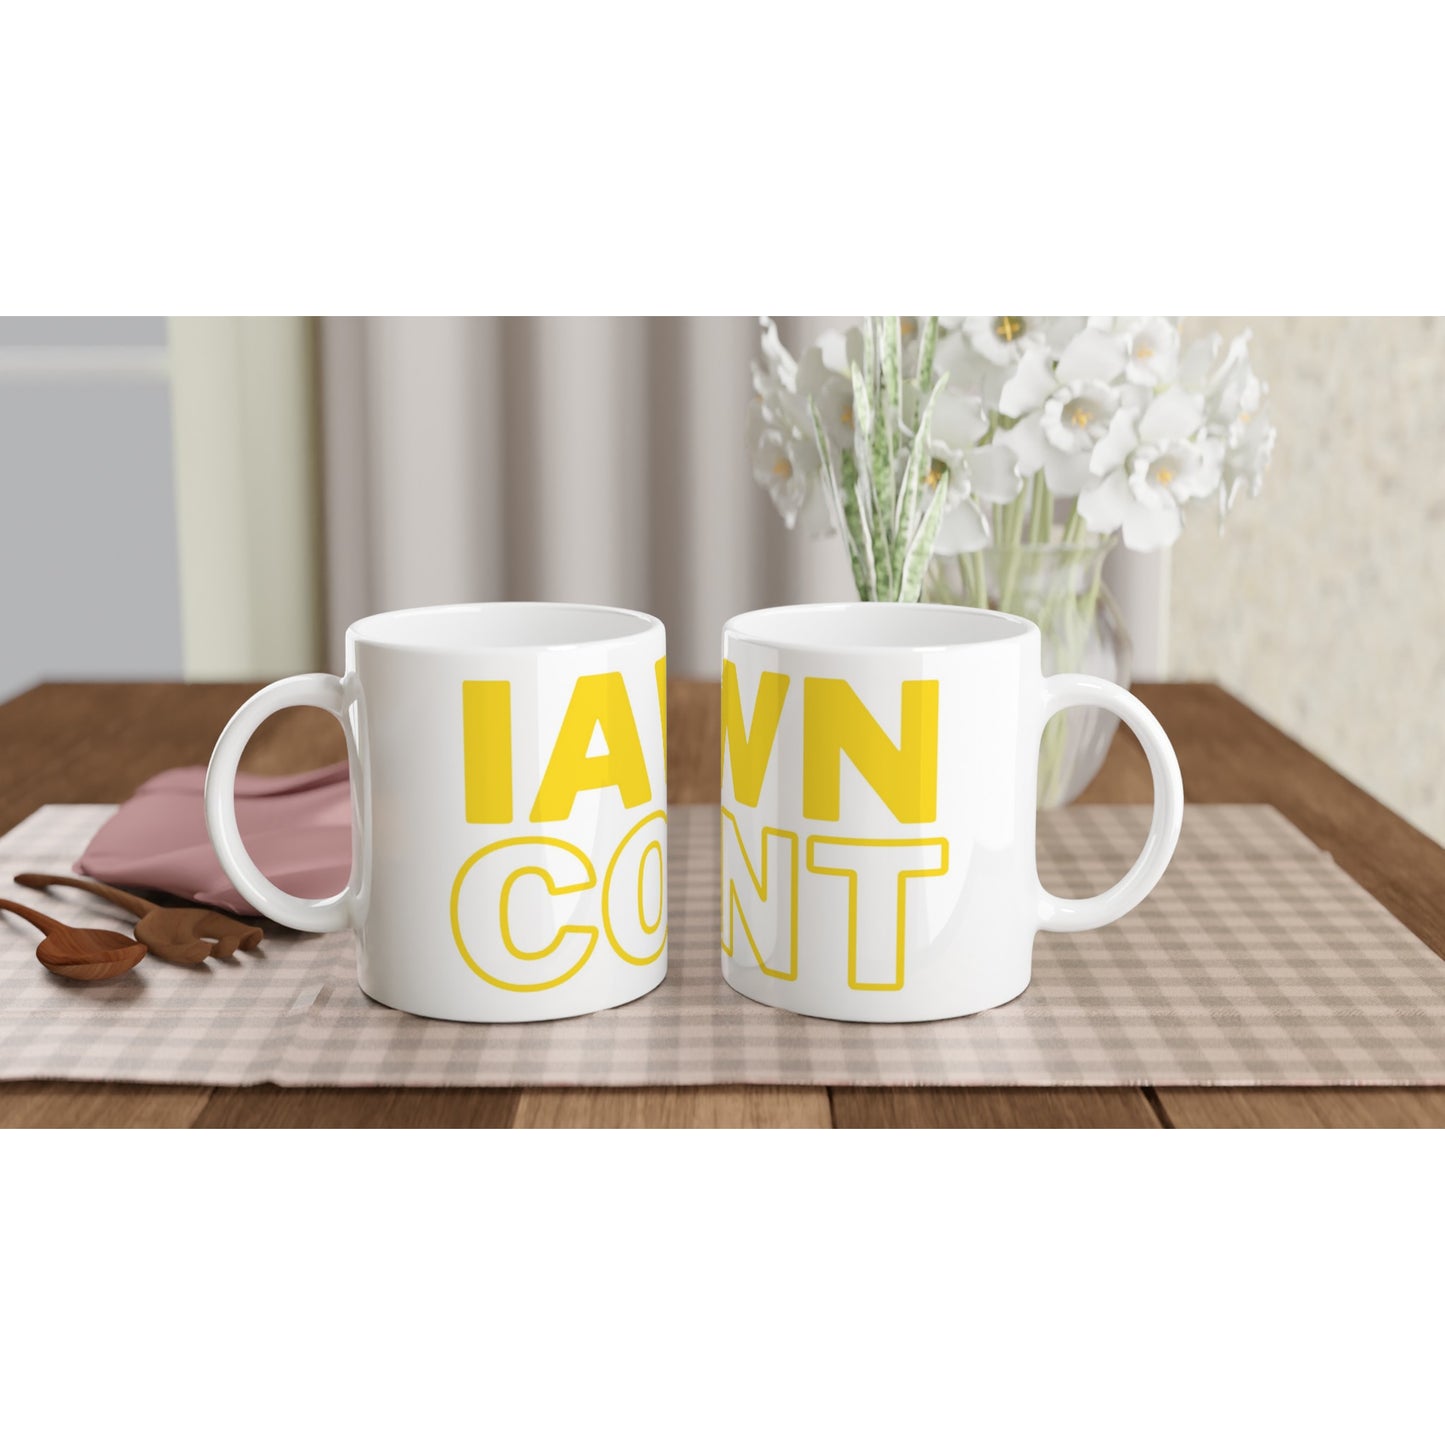 Iawn Cont - 11oz Ceramic Mug